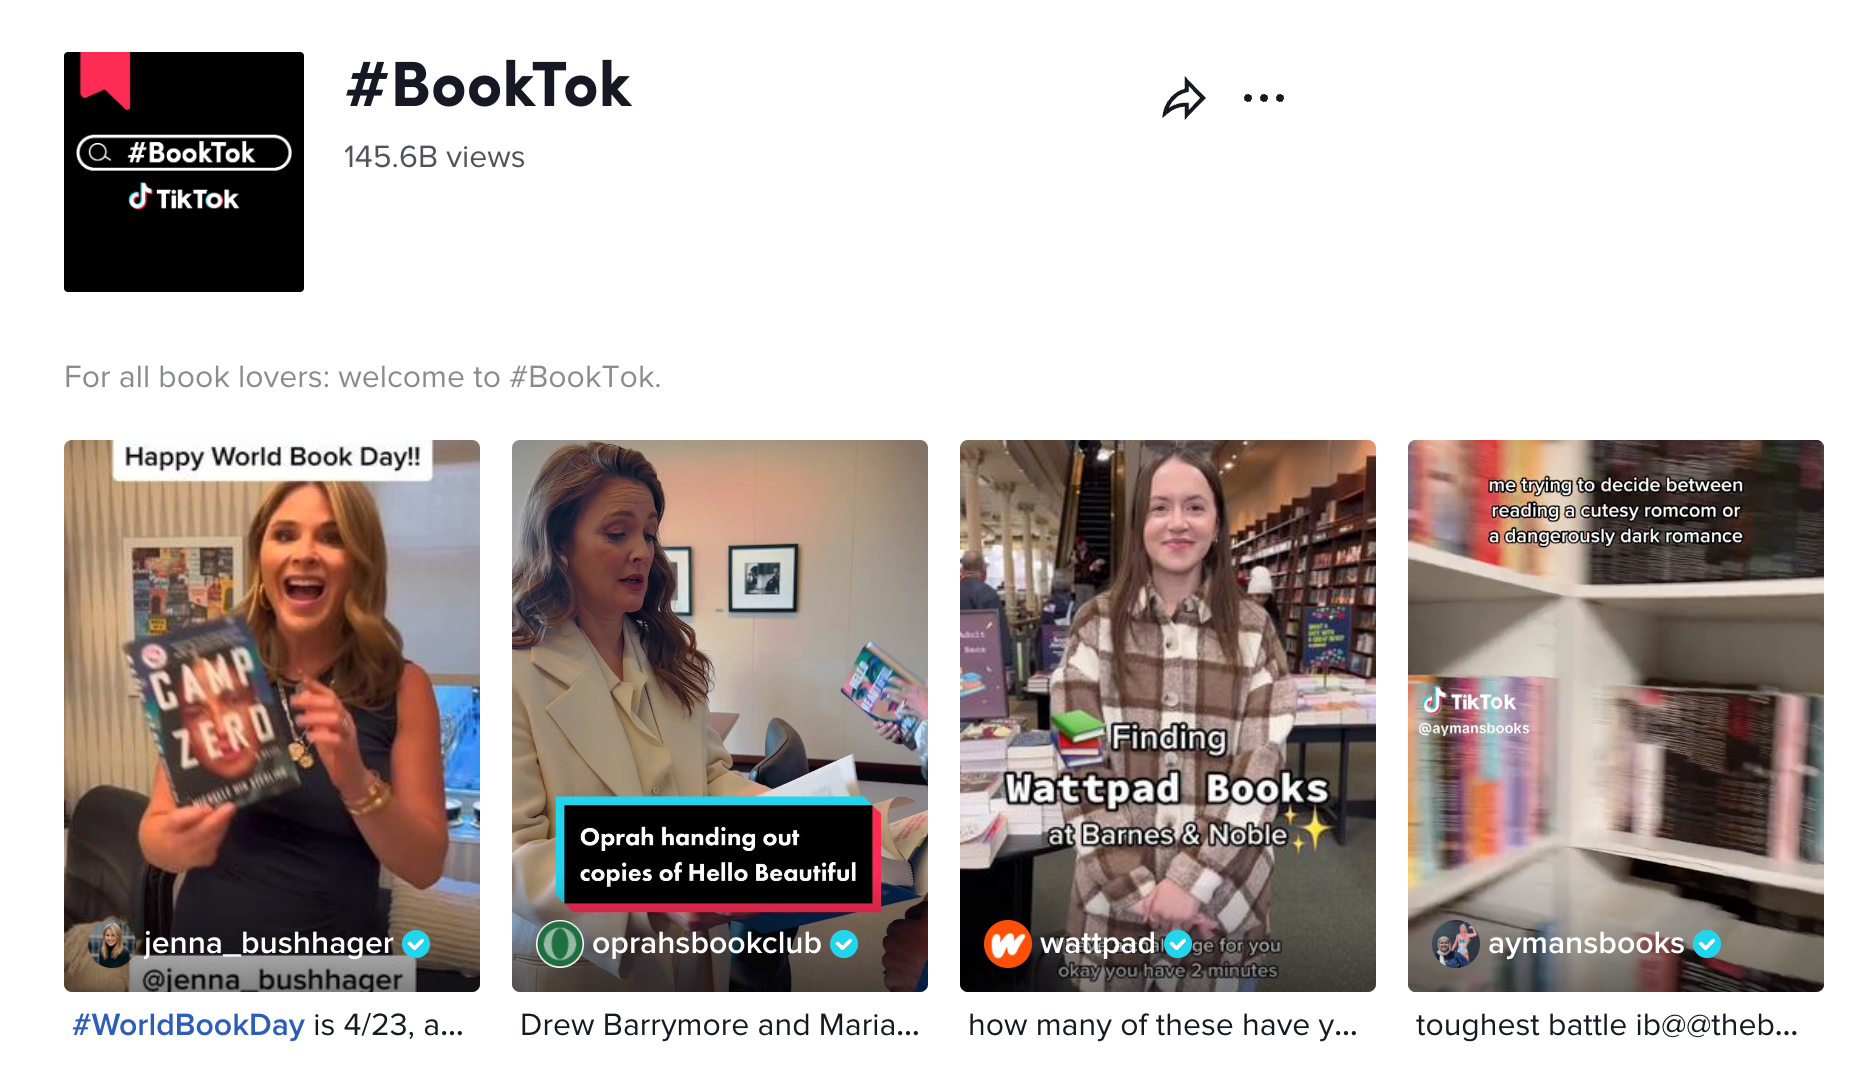 TikTok desktop version showing a page about the #Booktok subculture